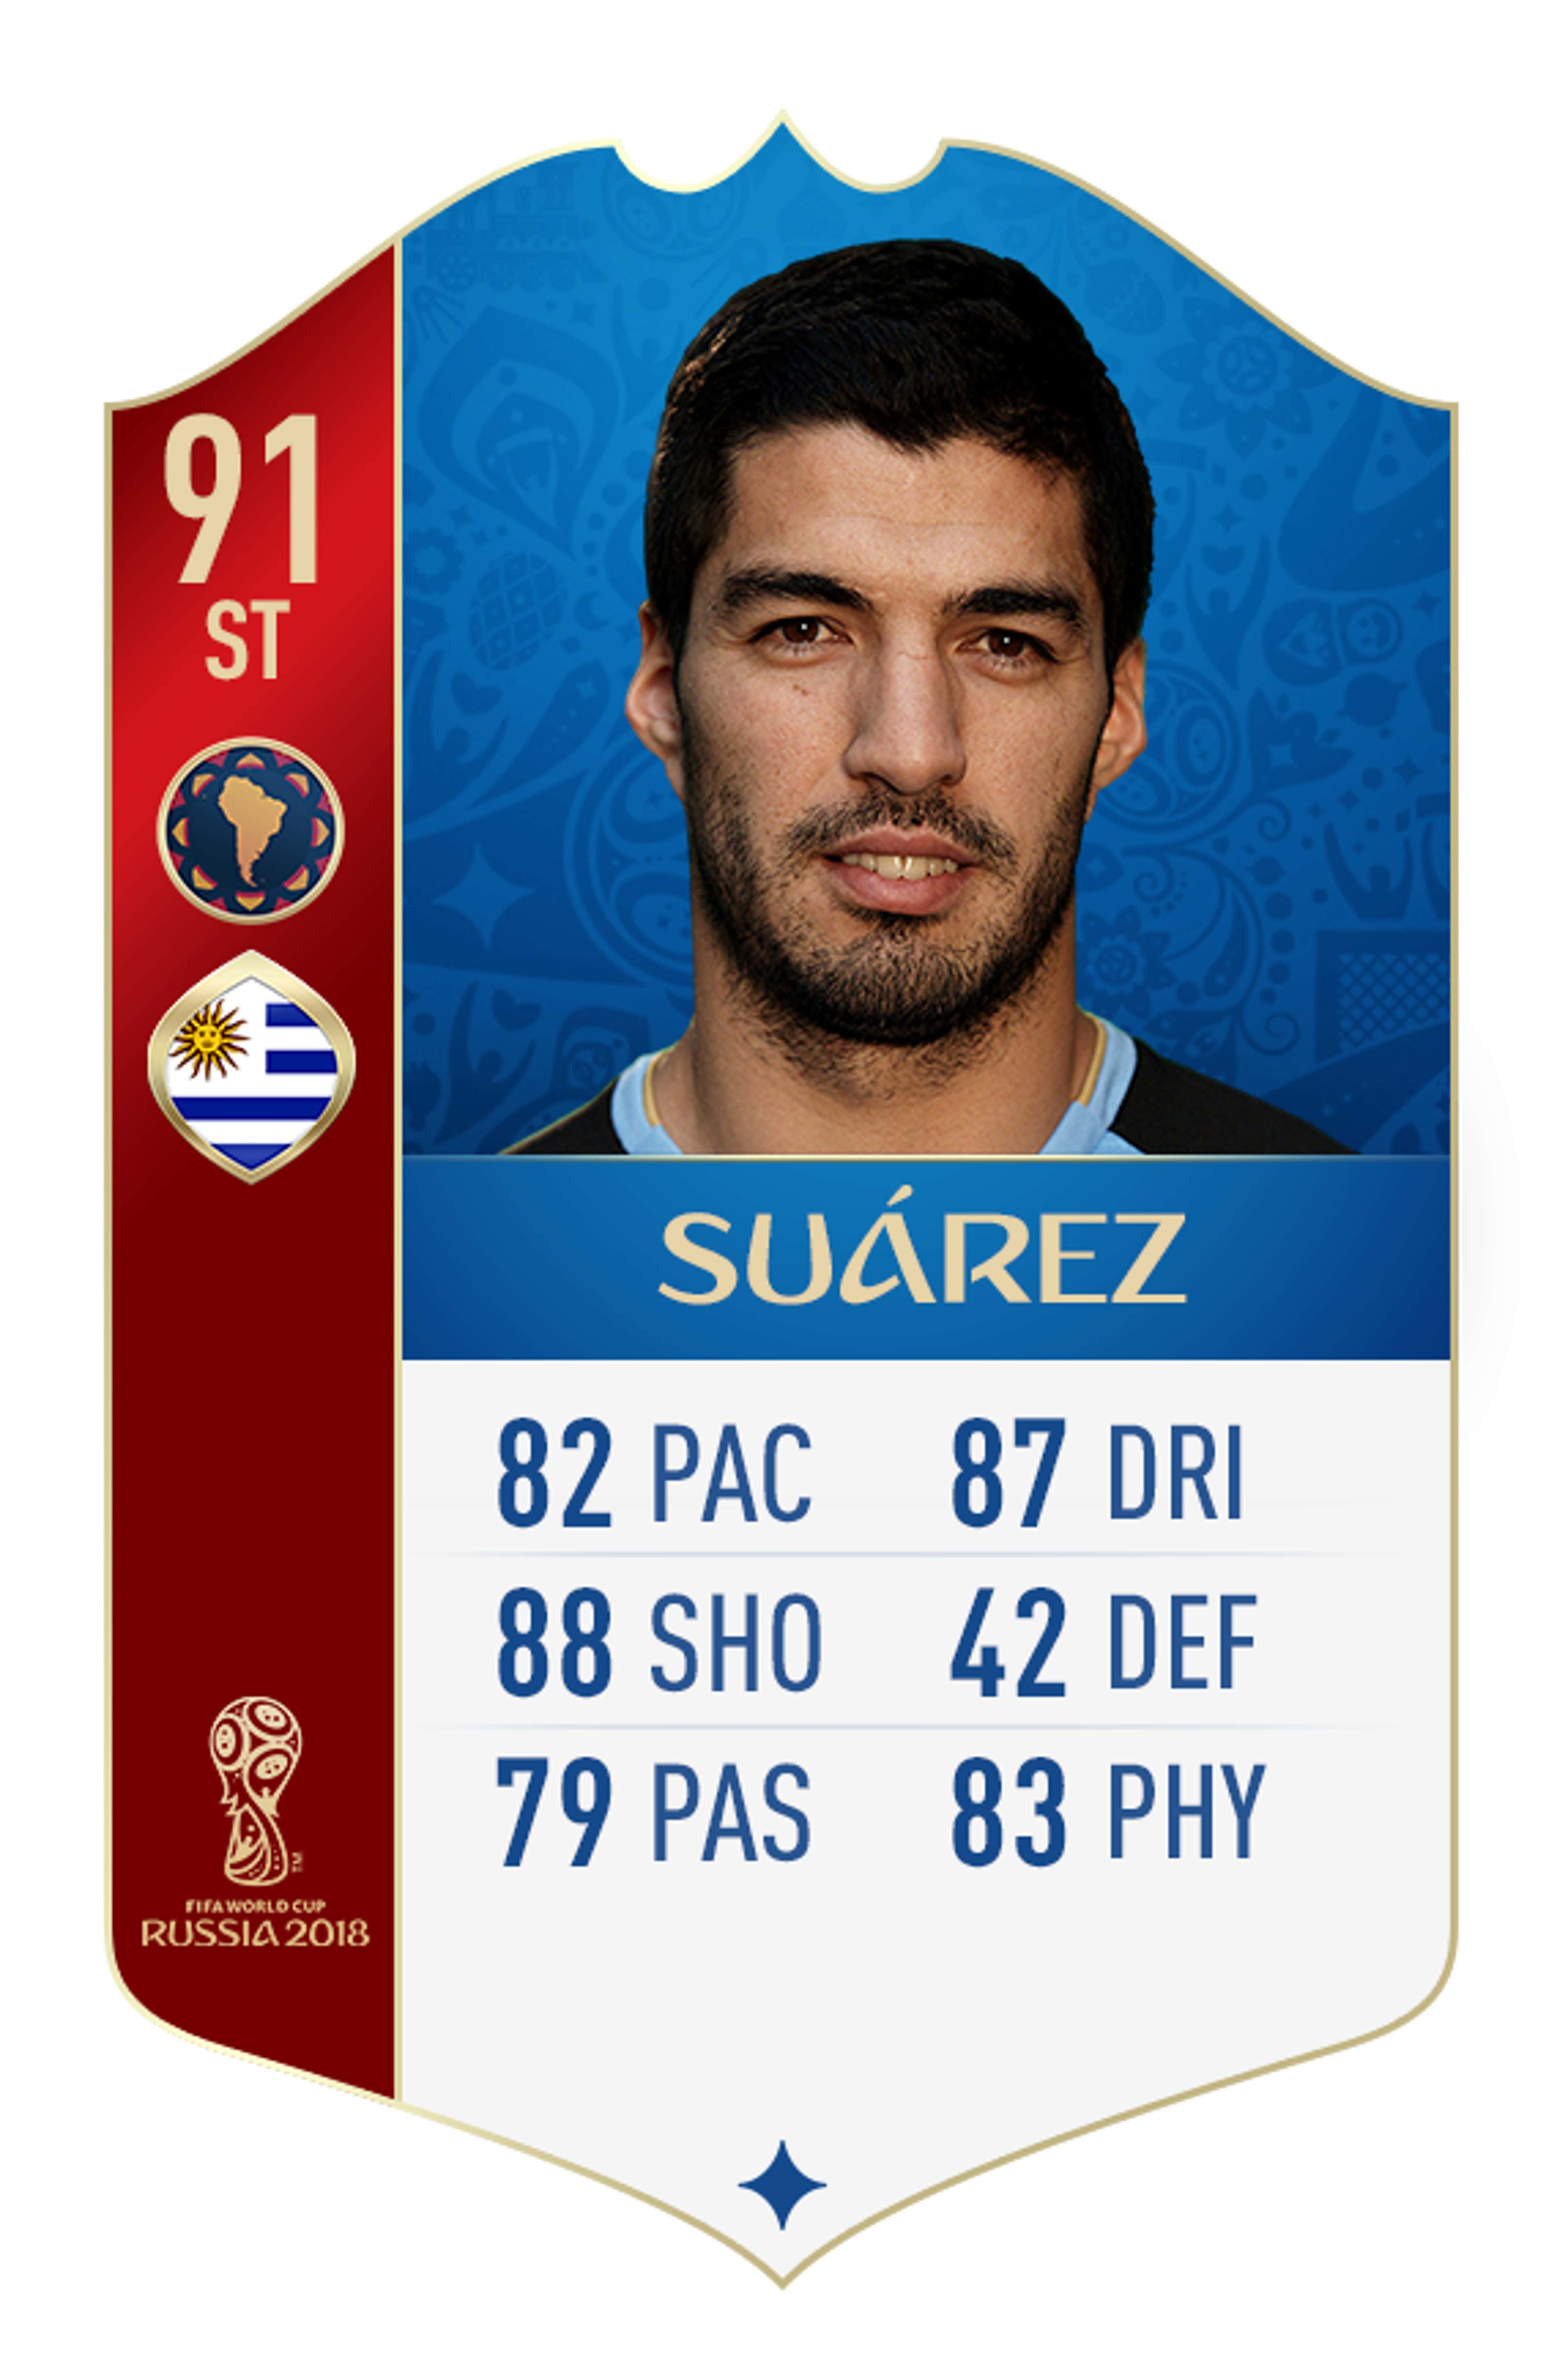 Luis Suarez FIFA 18 World Cup rating